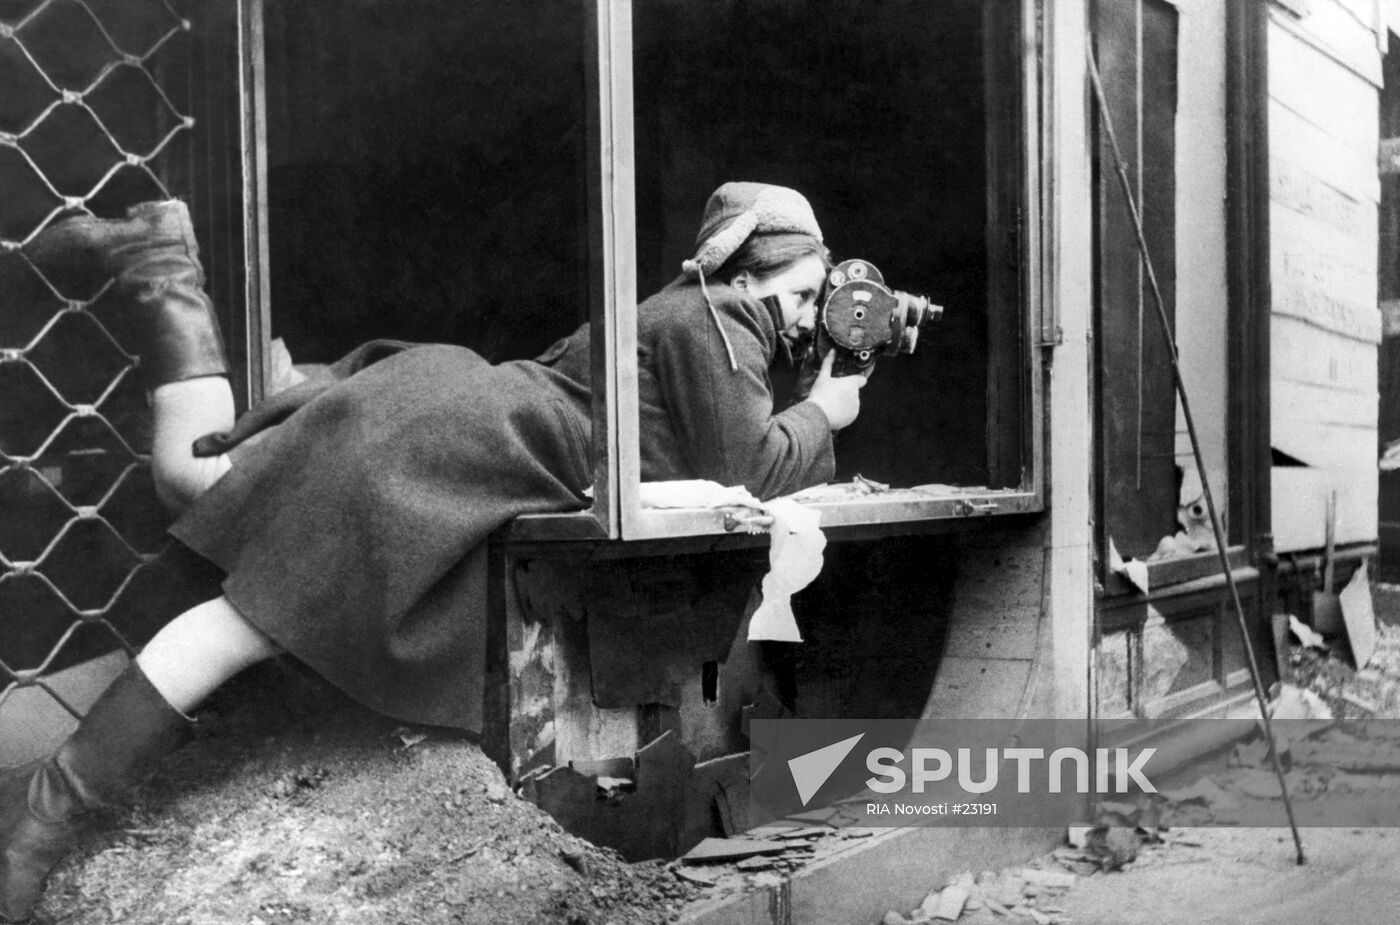 WWII CAMERA OPERATOR REIZMAN SHOOTING 